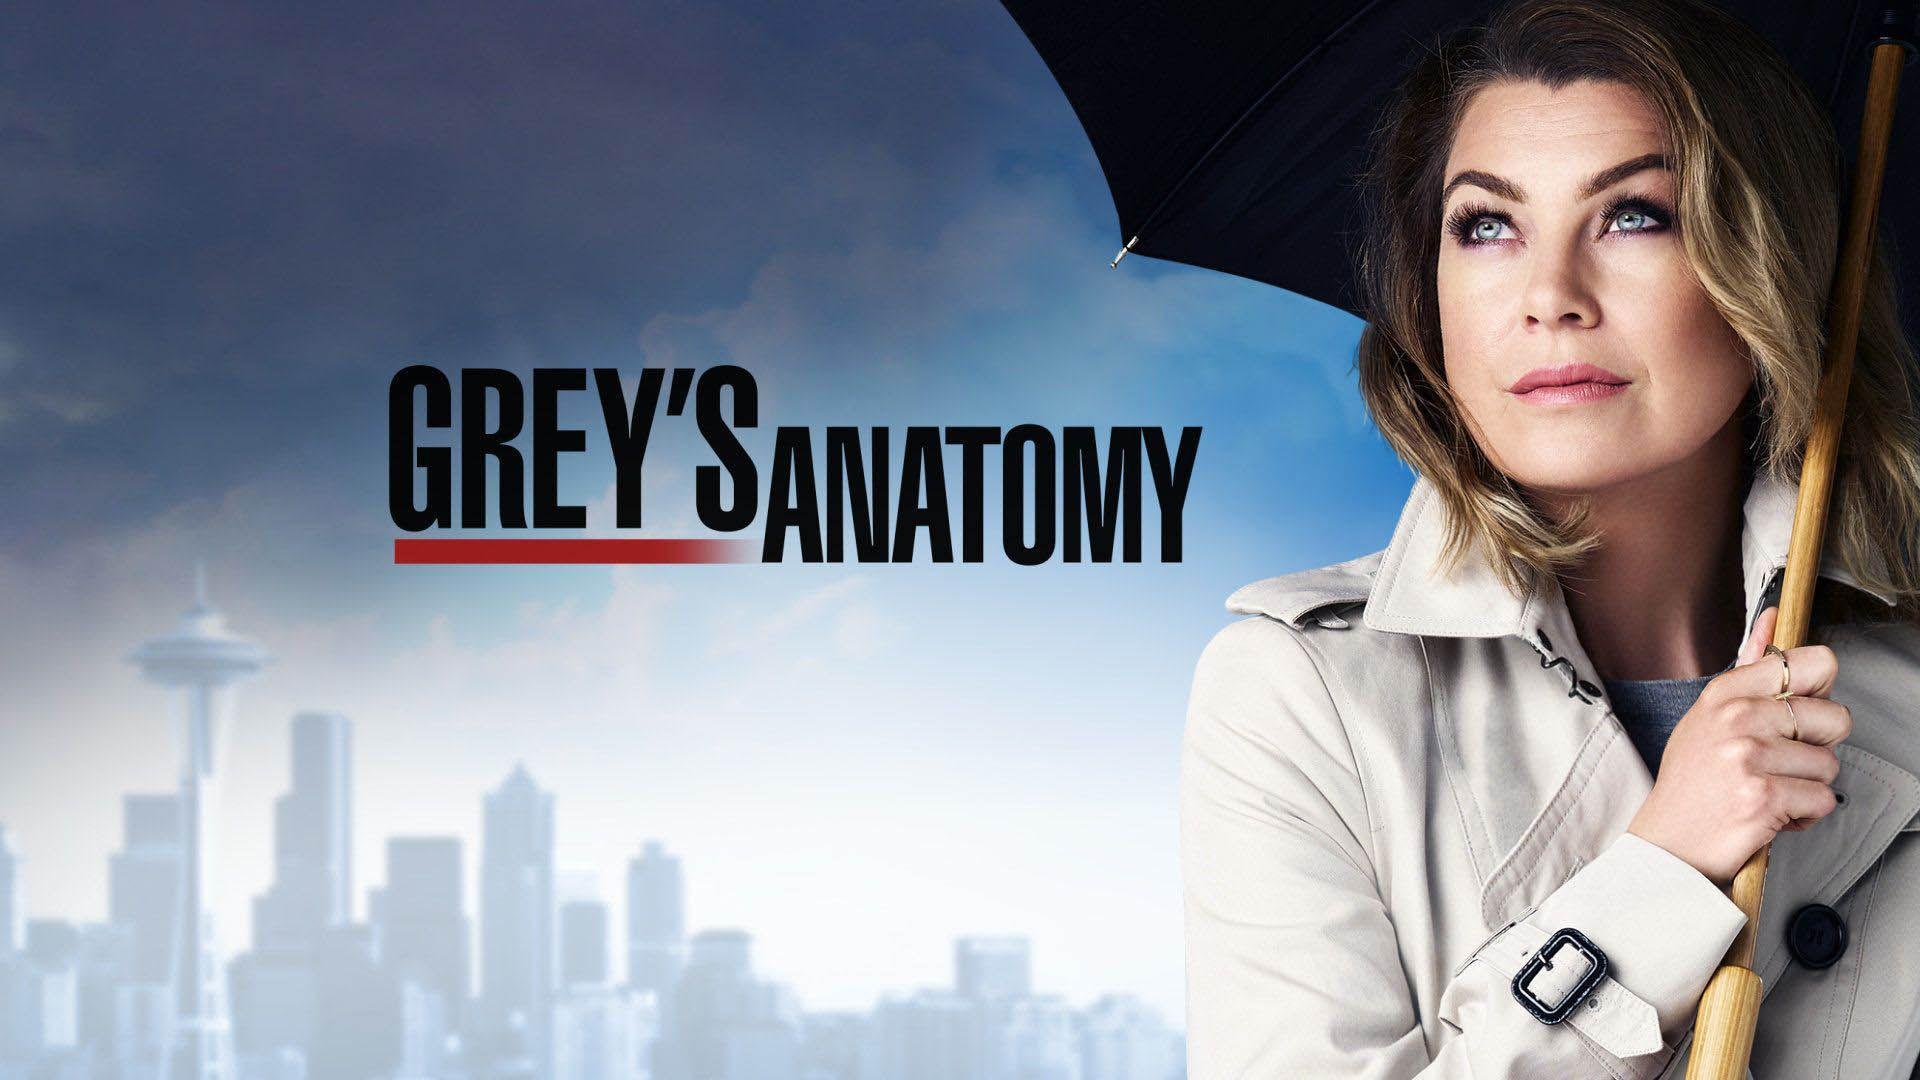 Grey's Anatomy Season 12 Poster